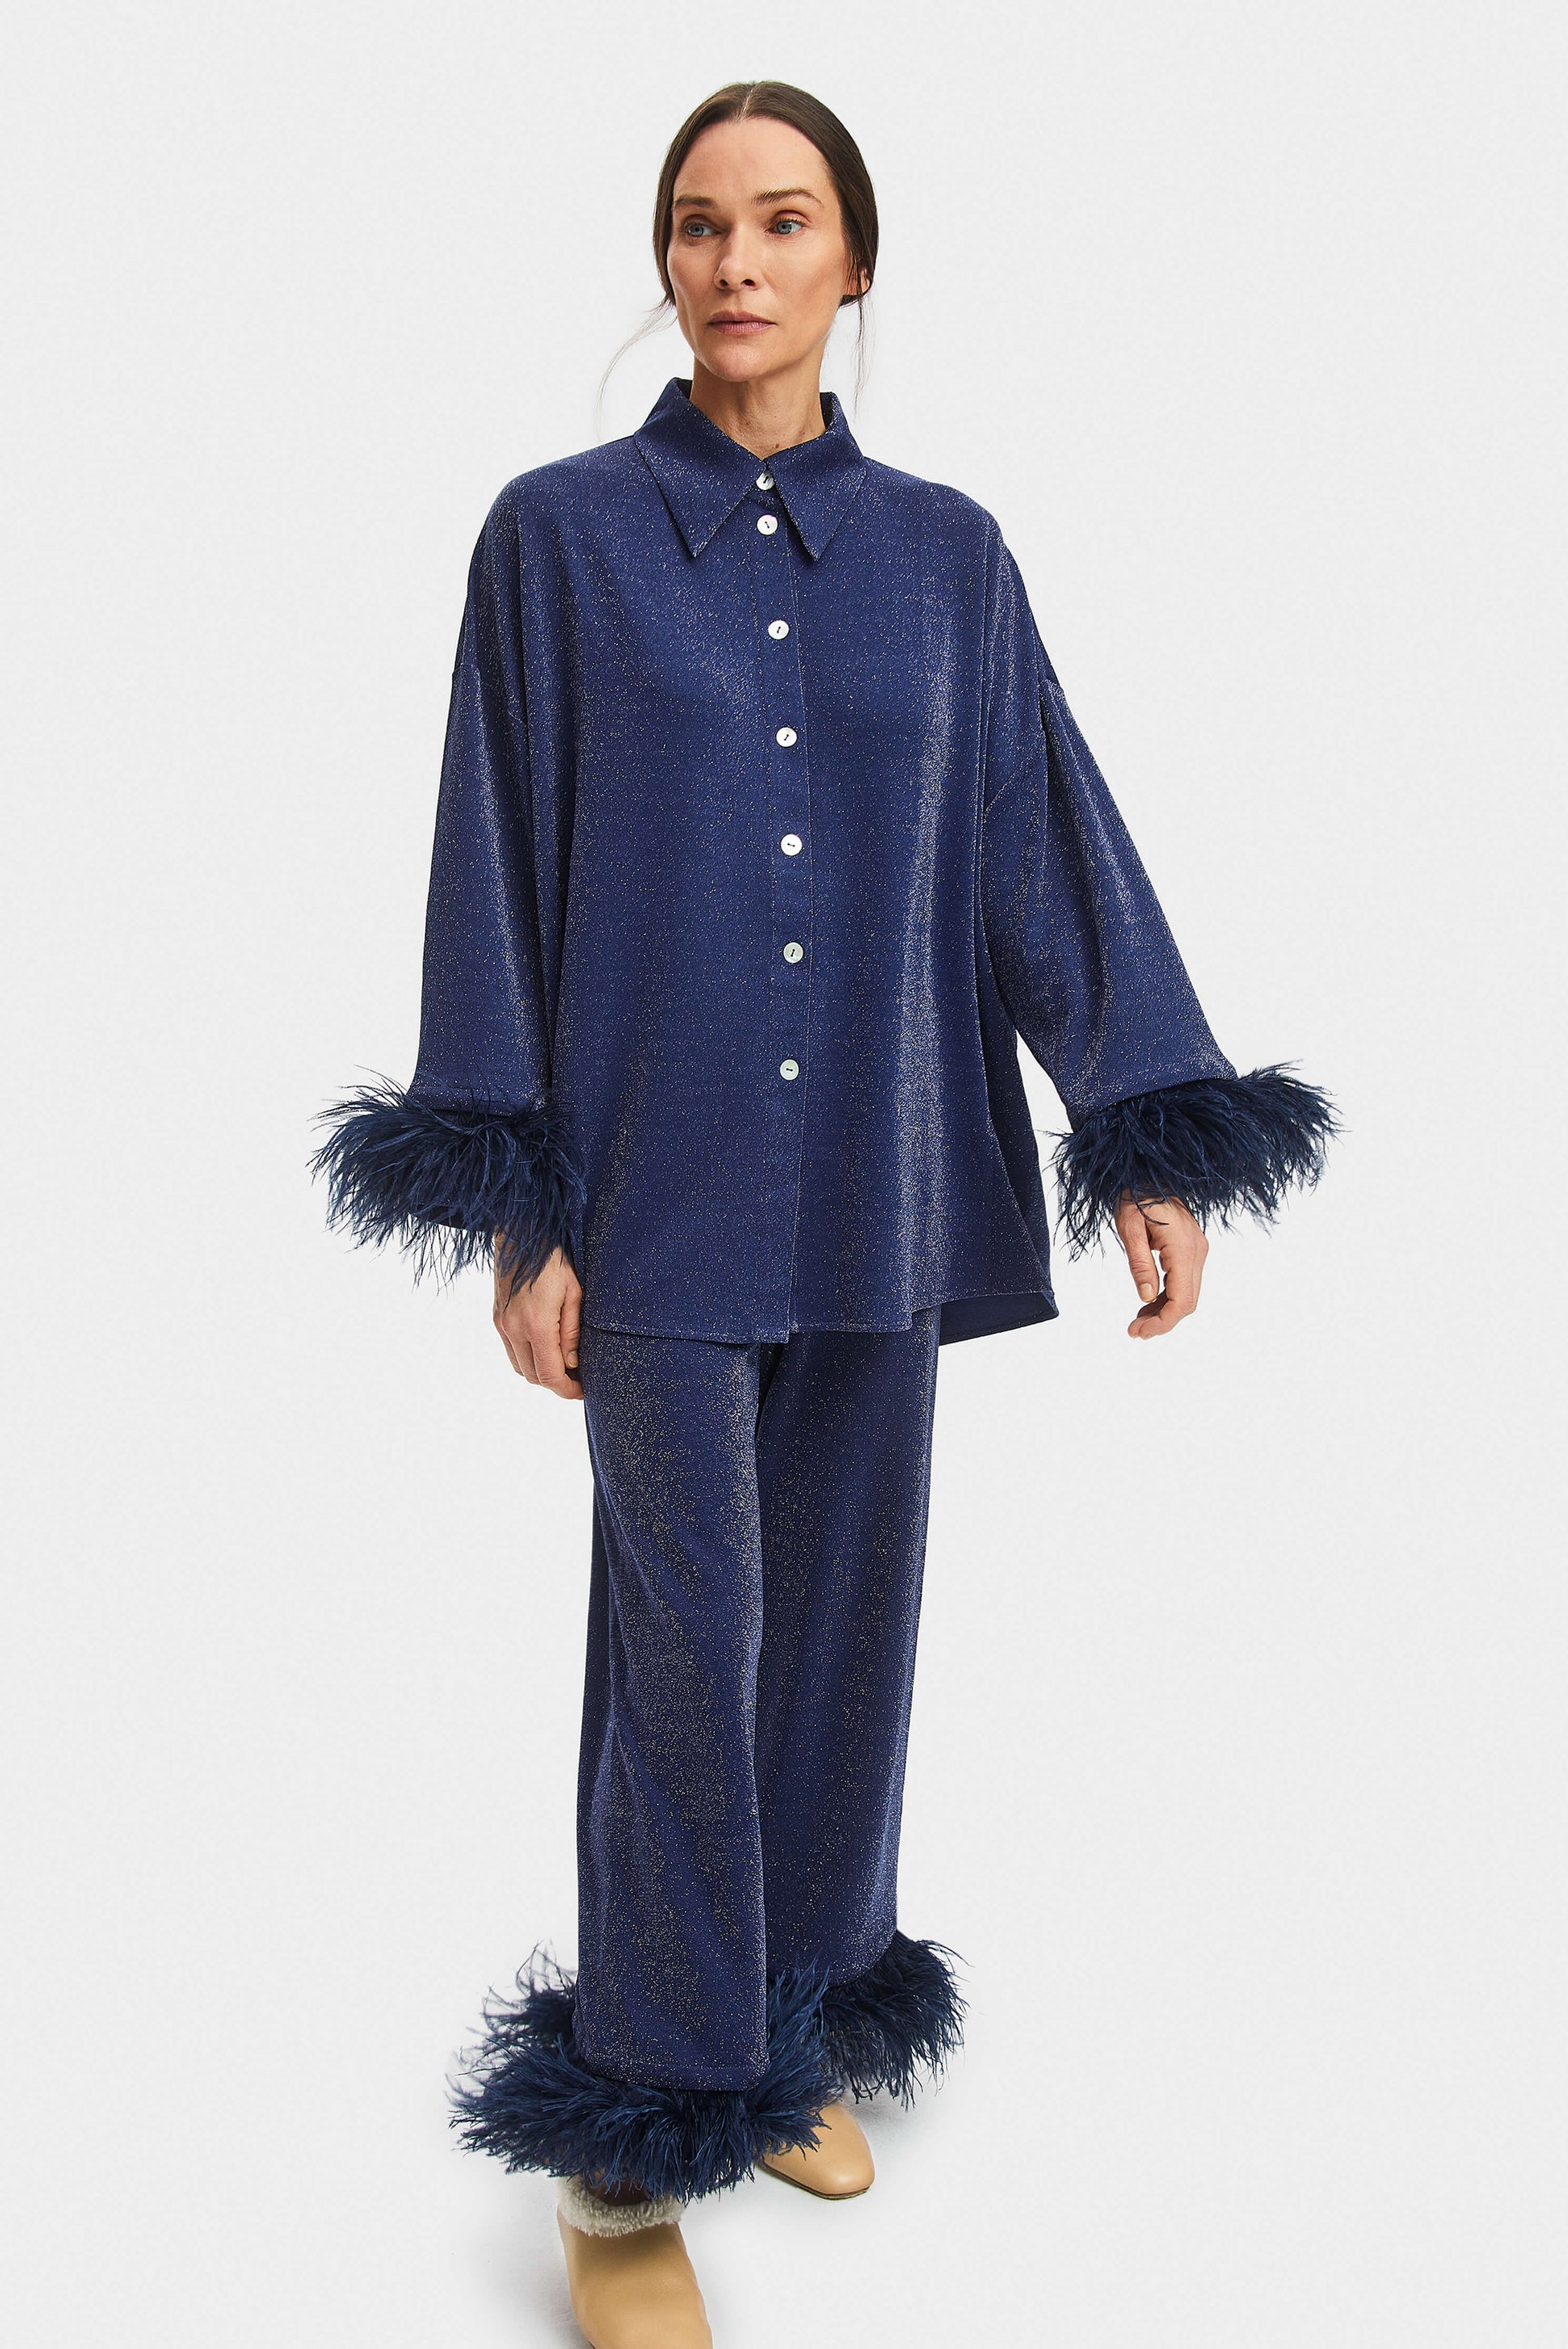 Cosmos Oversized Metallic Jersey Pajama Set in Navy – Sleeper